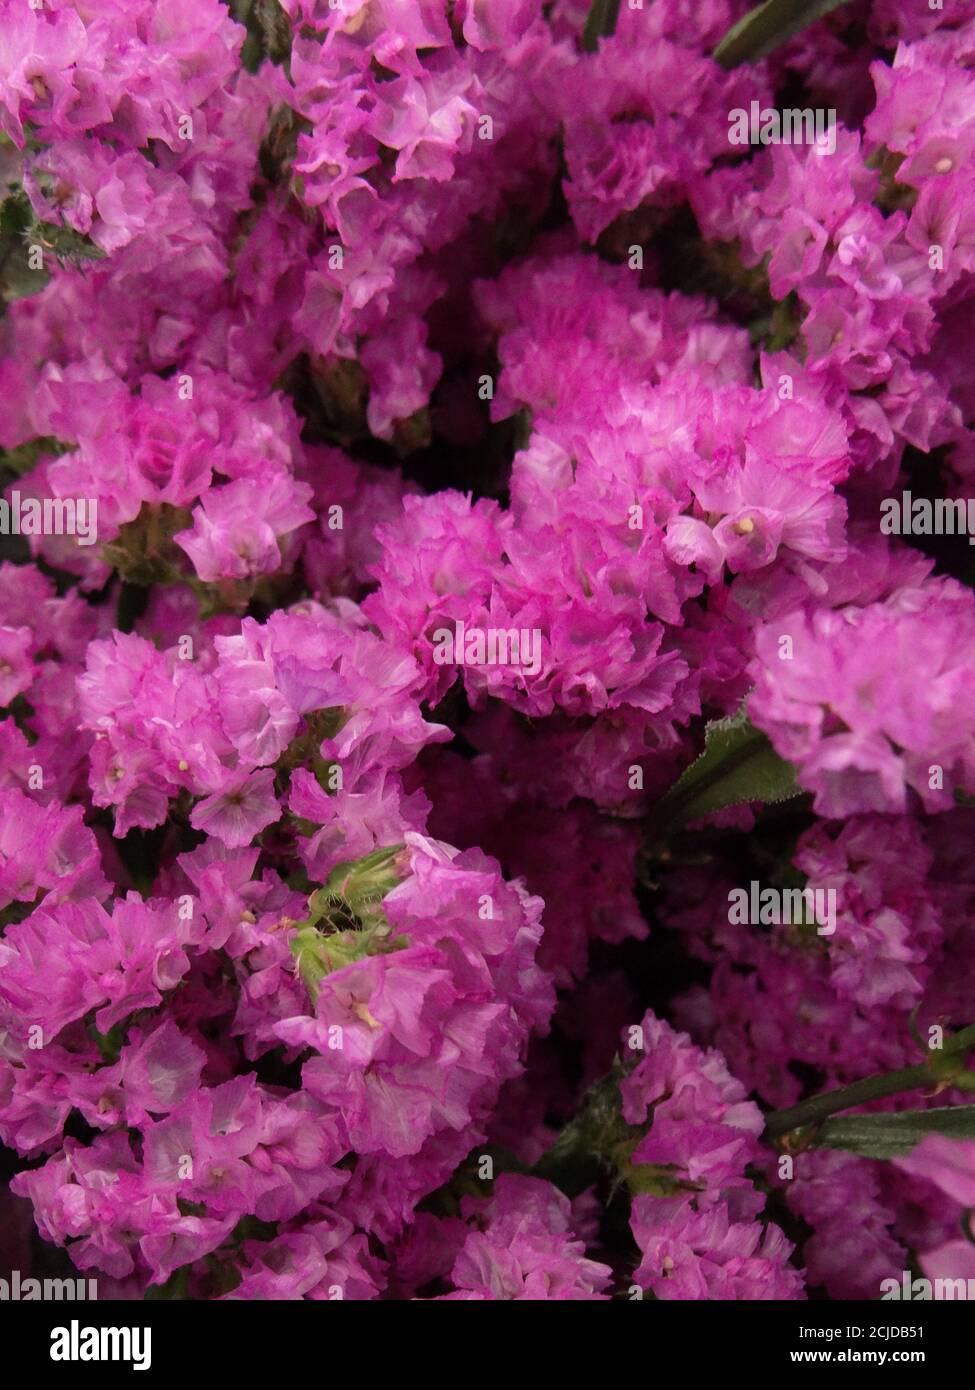 Closeup shot of beautiful pink Limonium flowers Stock Photo